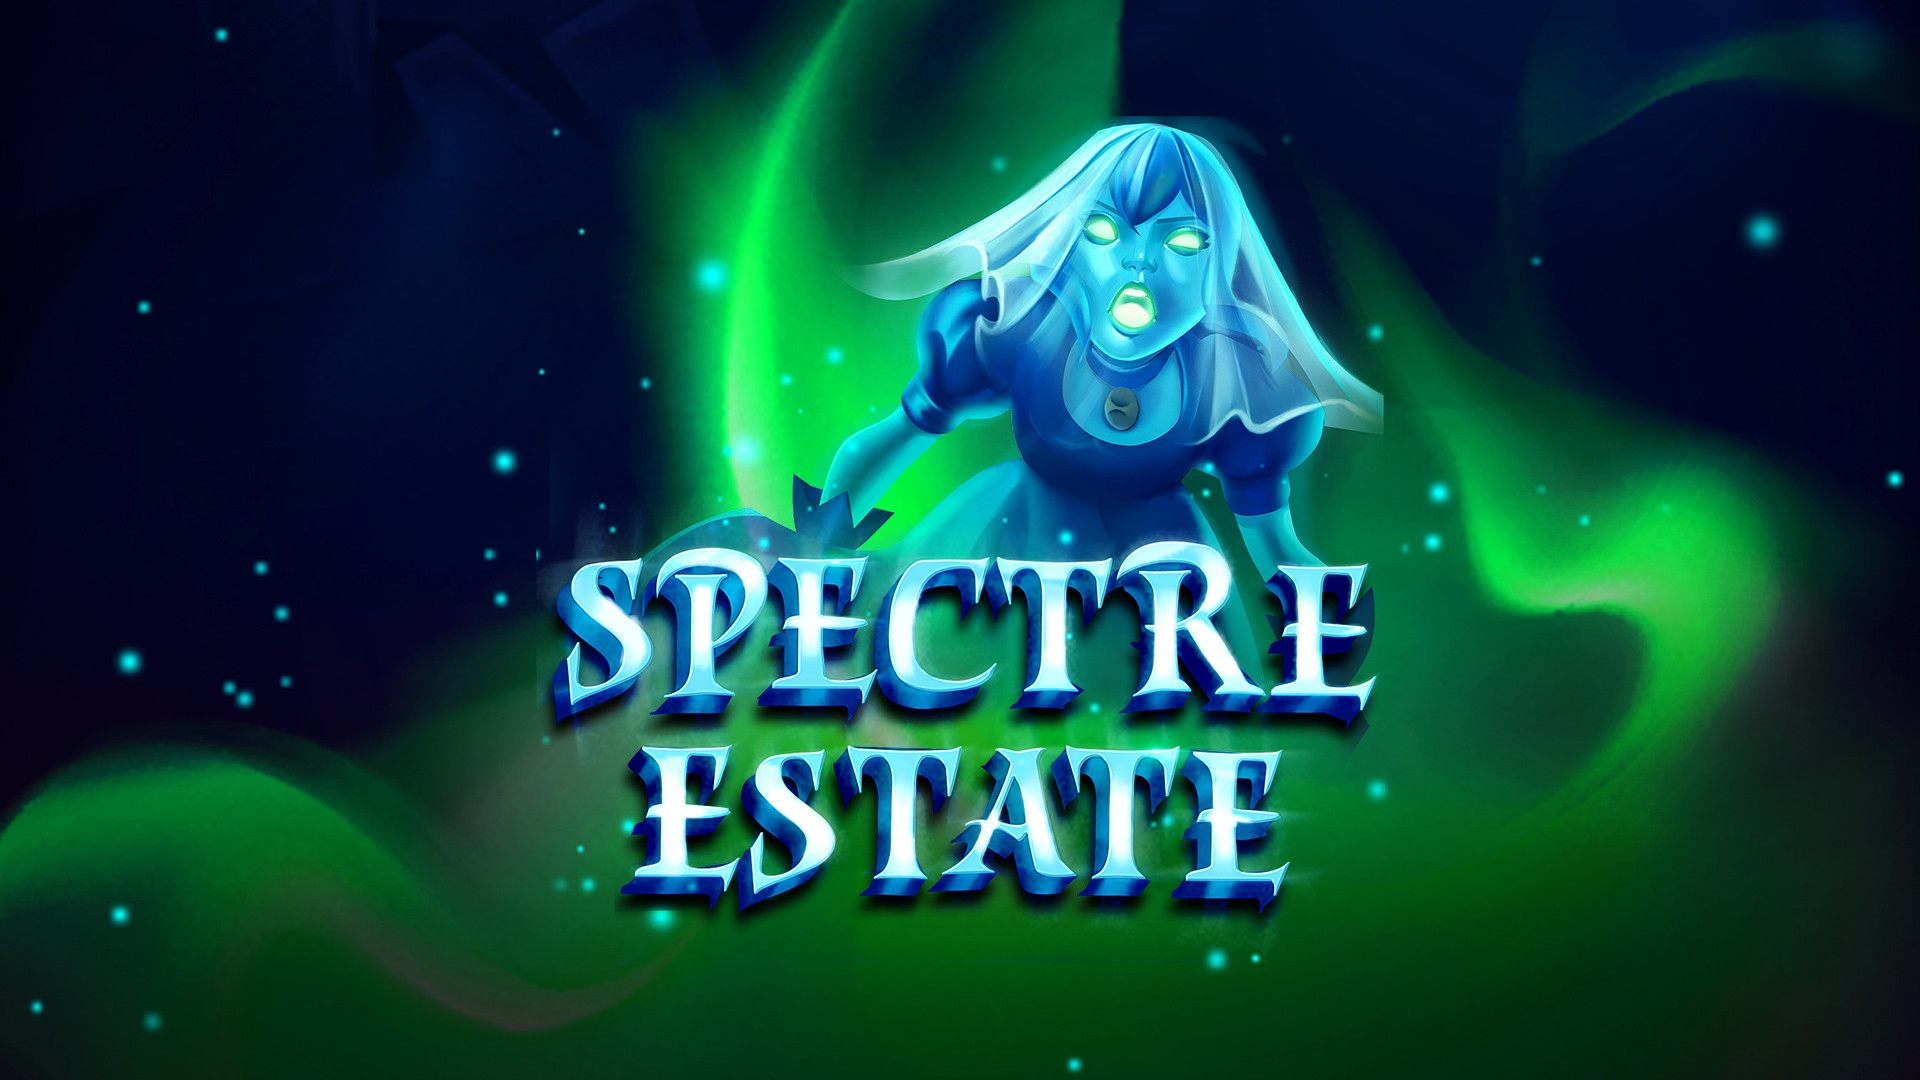 Spectre Estate